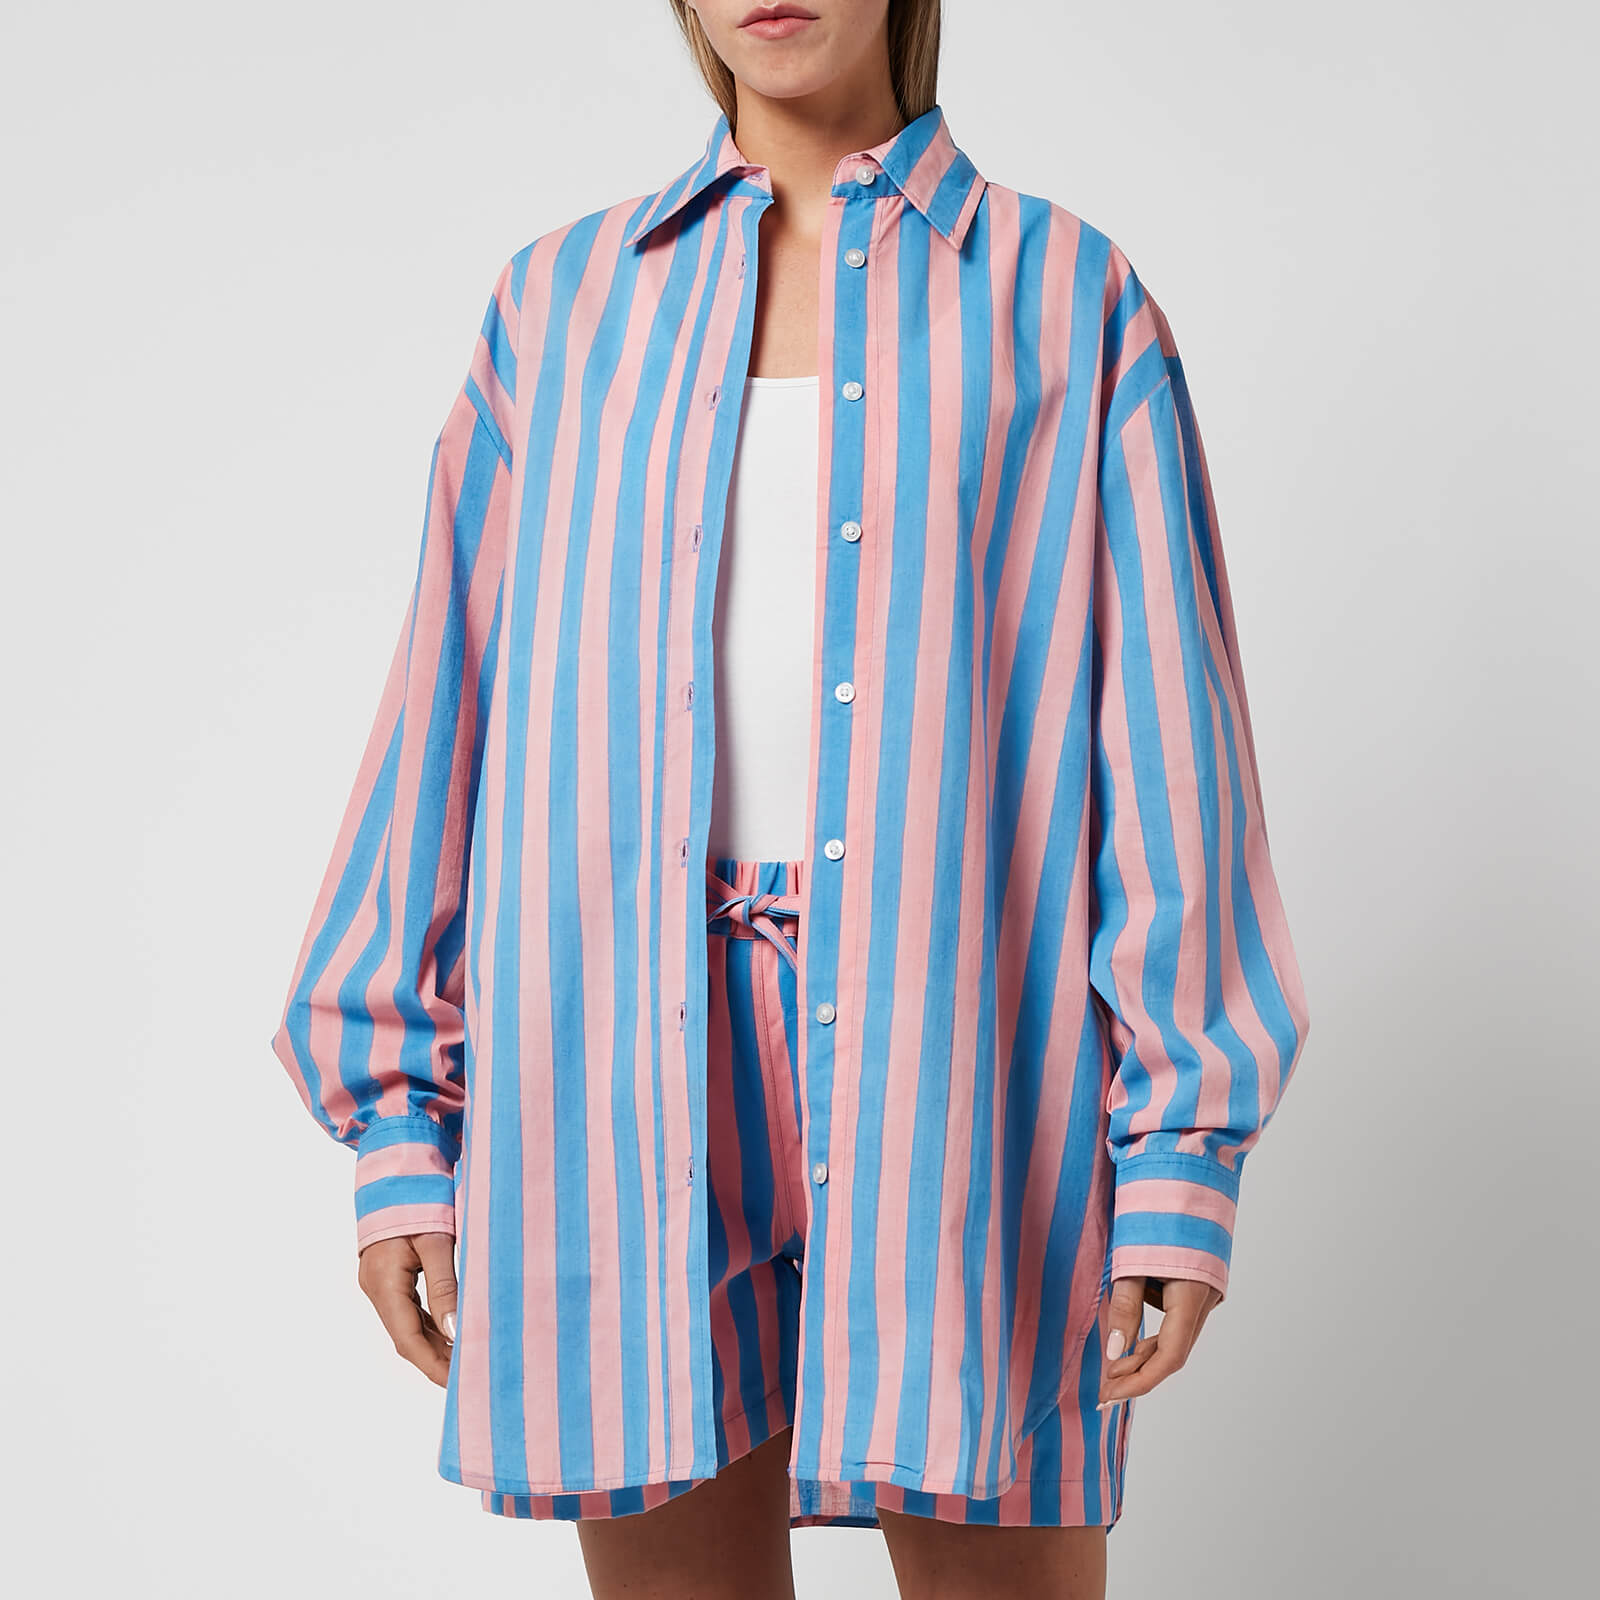 SZ Blockprints Women's Oversized Button Down Shirt - Faded Rose & London Blue - M